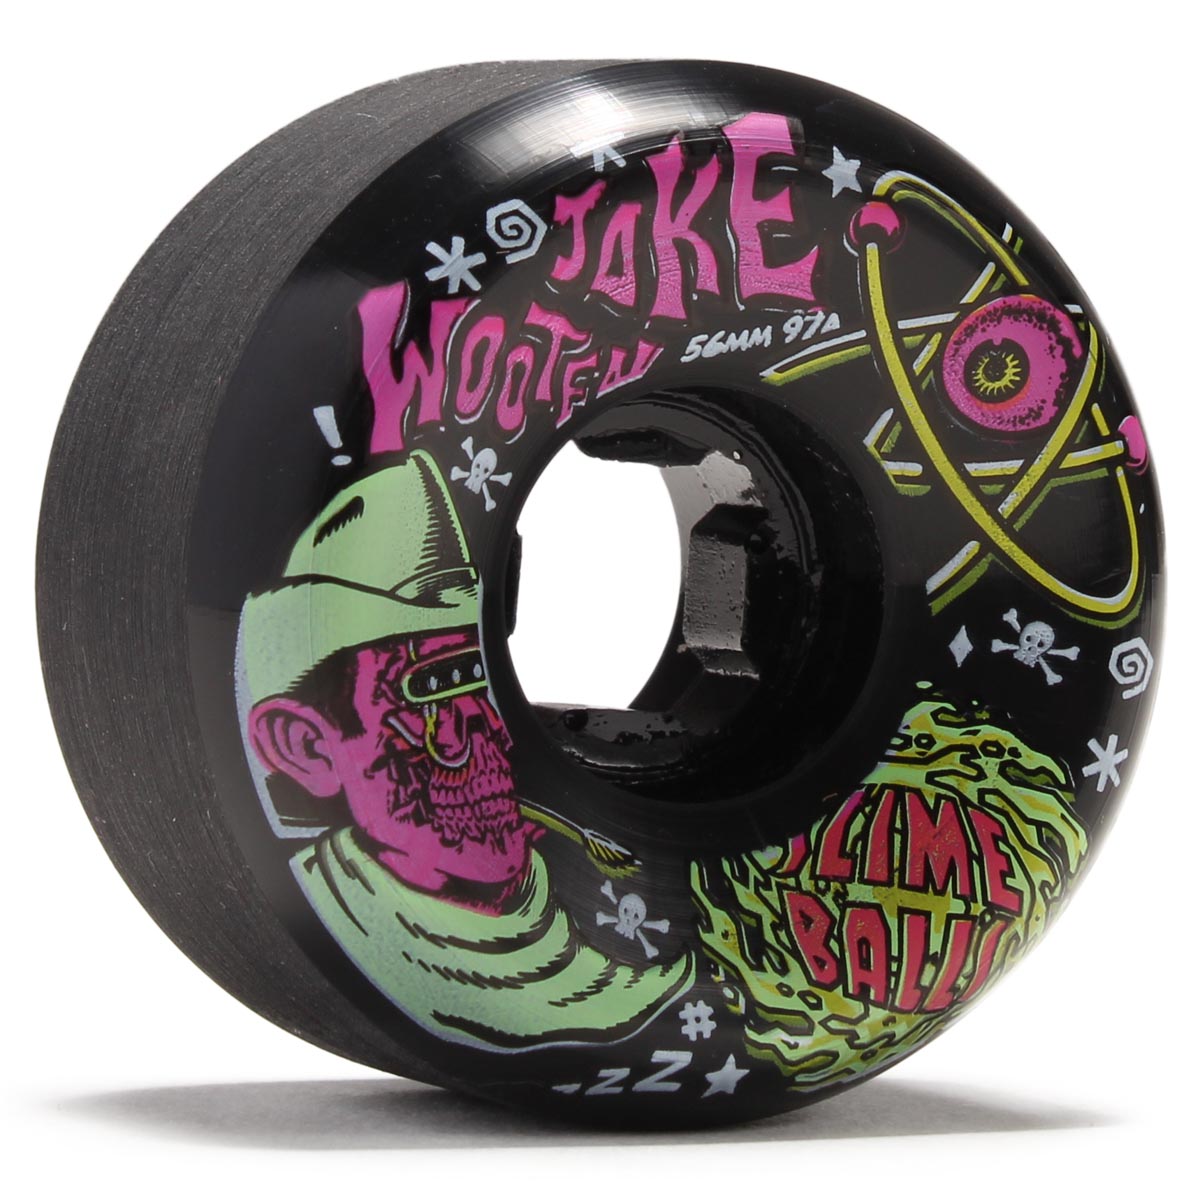 Slime Balls Jake Wooten Fever Dream Vomit Mini 97a Skateboard Wheels - Black - 56mm image 1